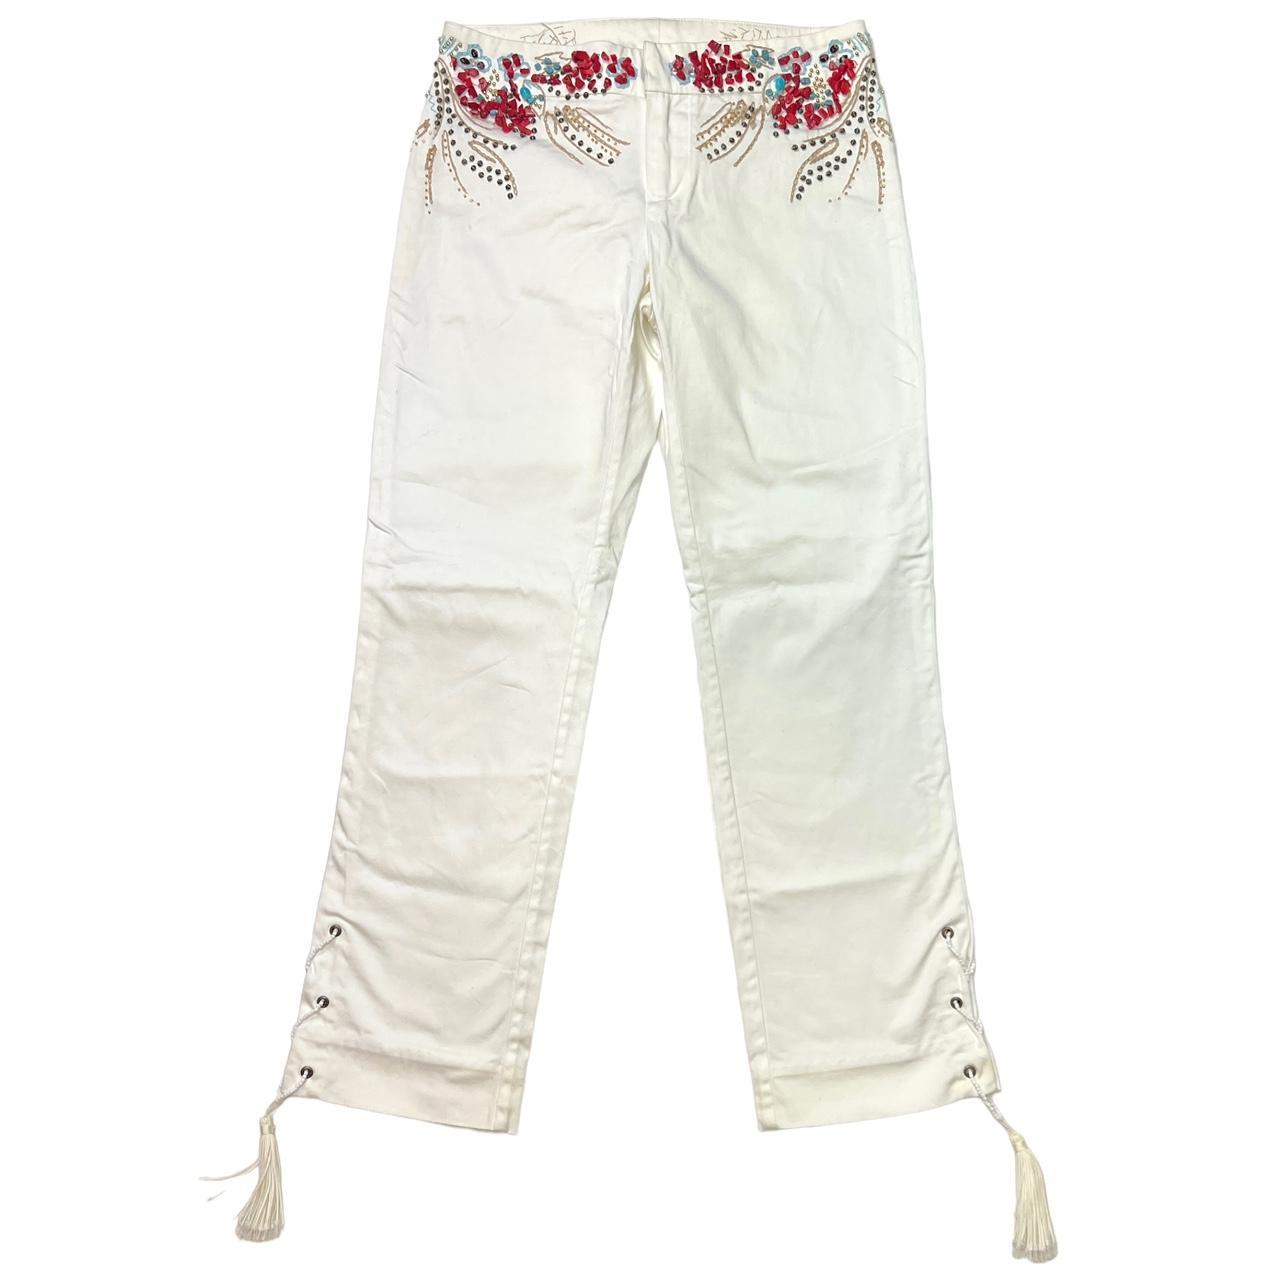 Embellished Capri Pants